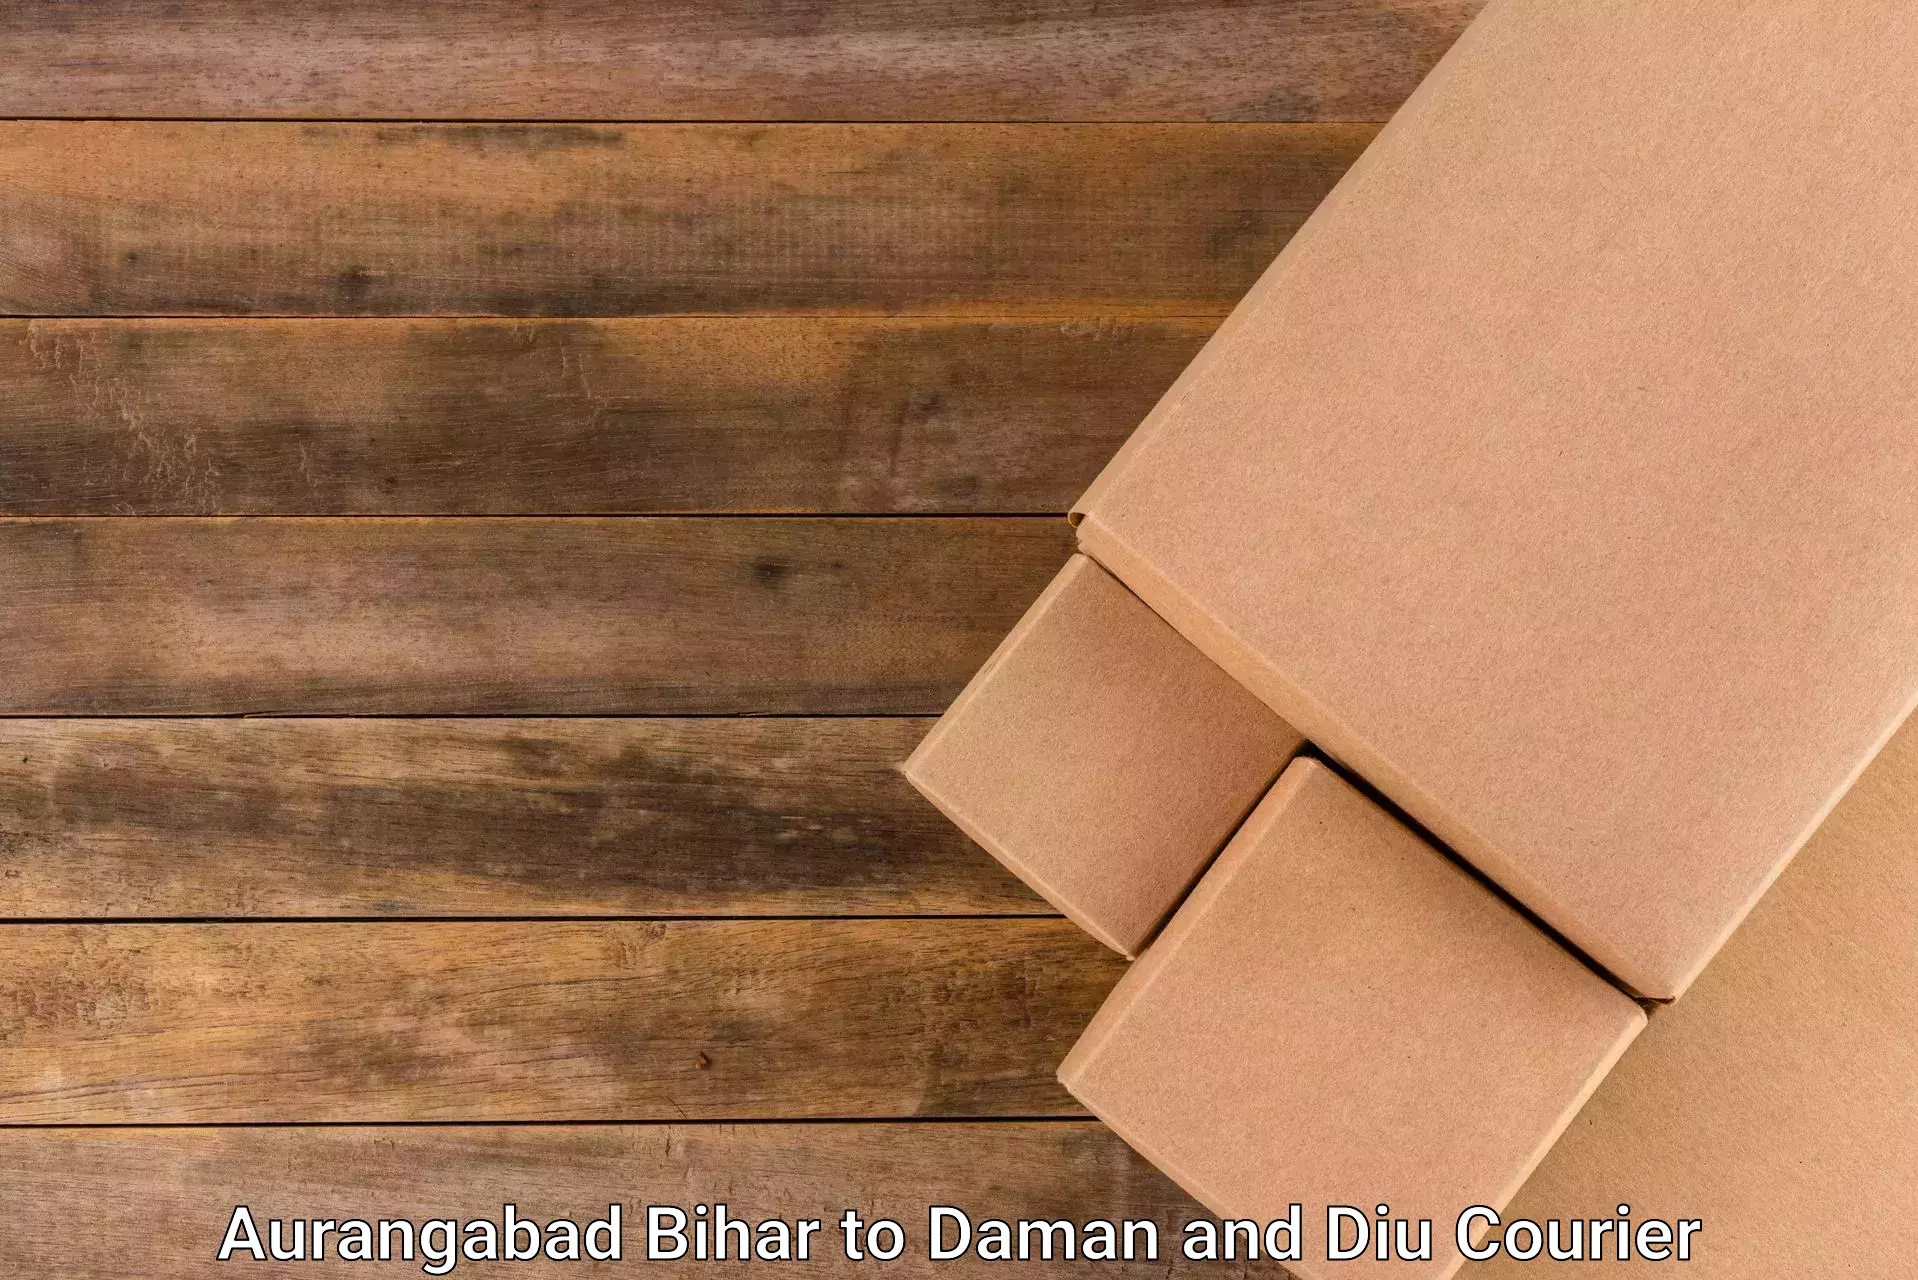 Multi-national courier services Aurangabad Bihar to Diu